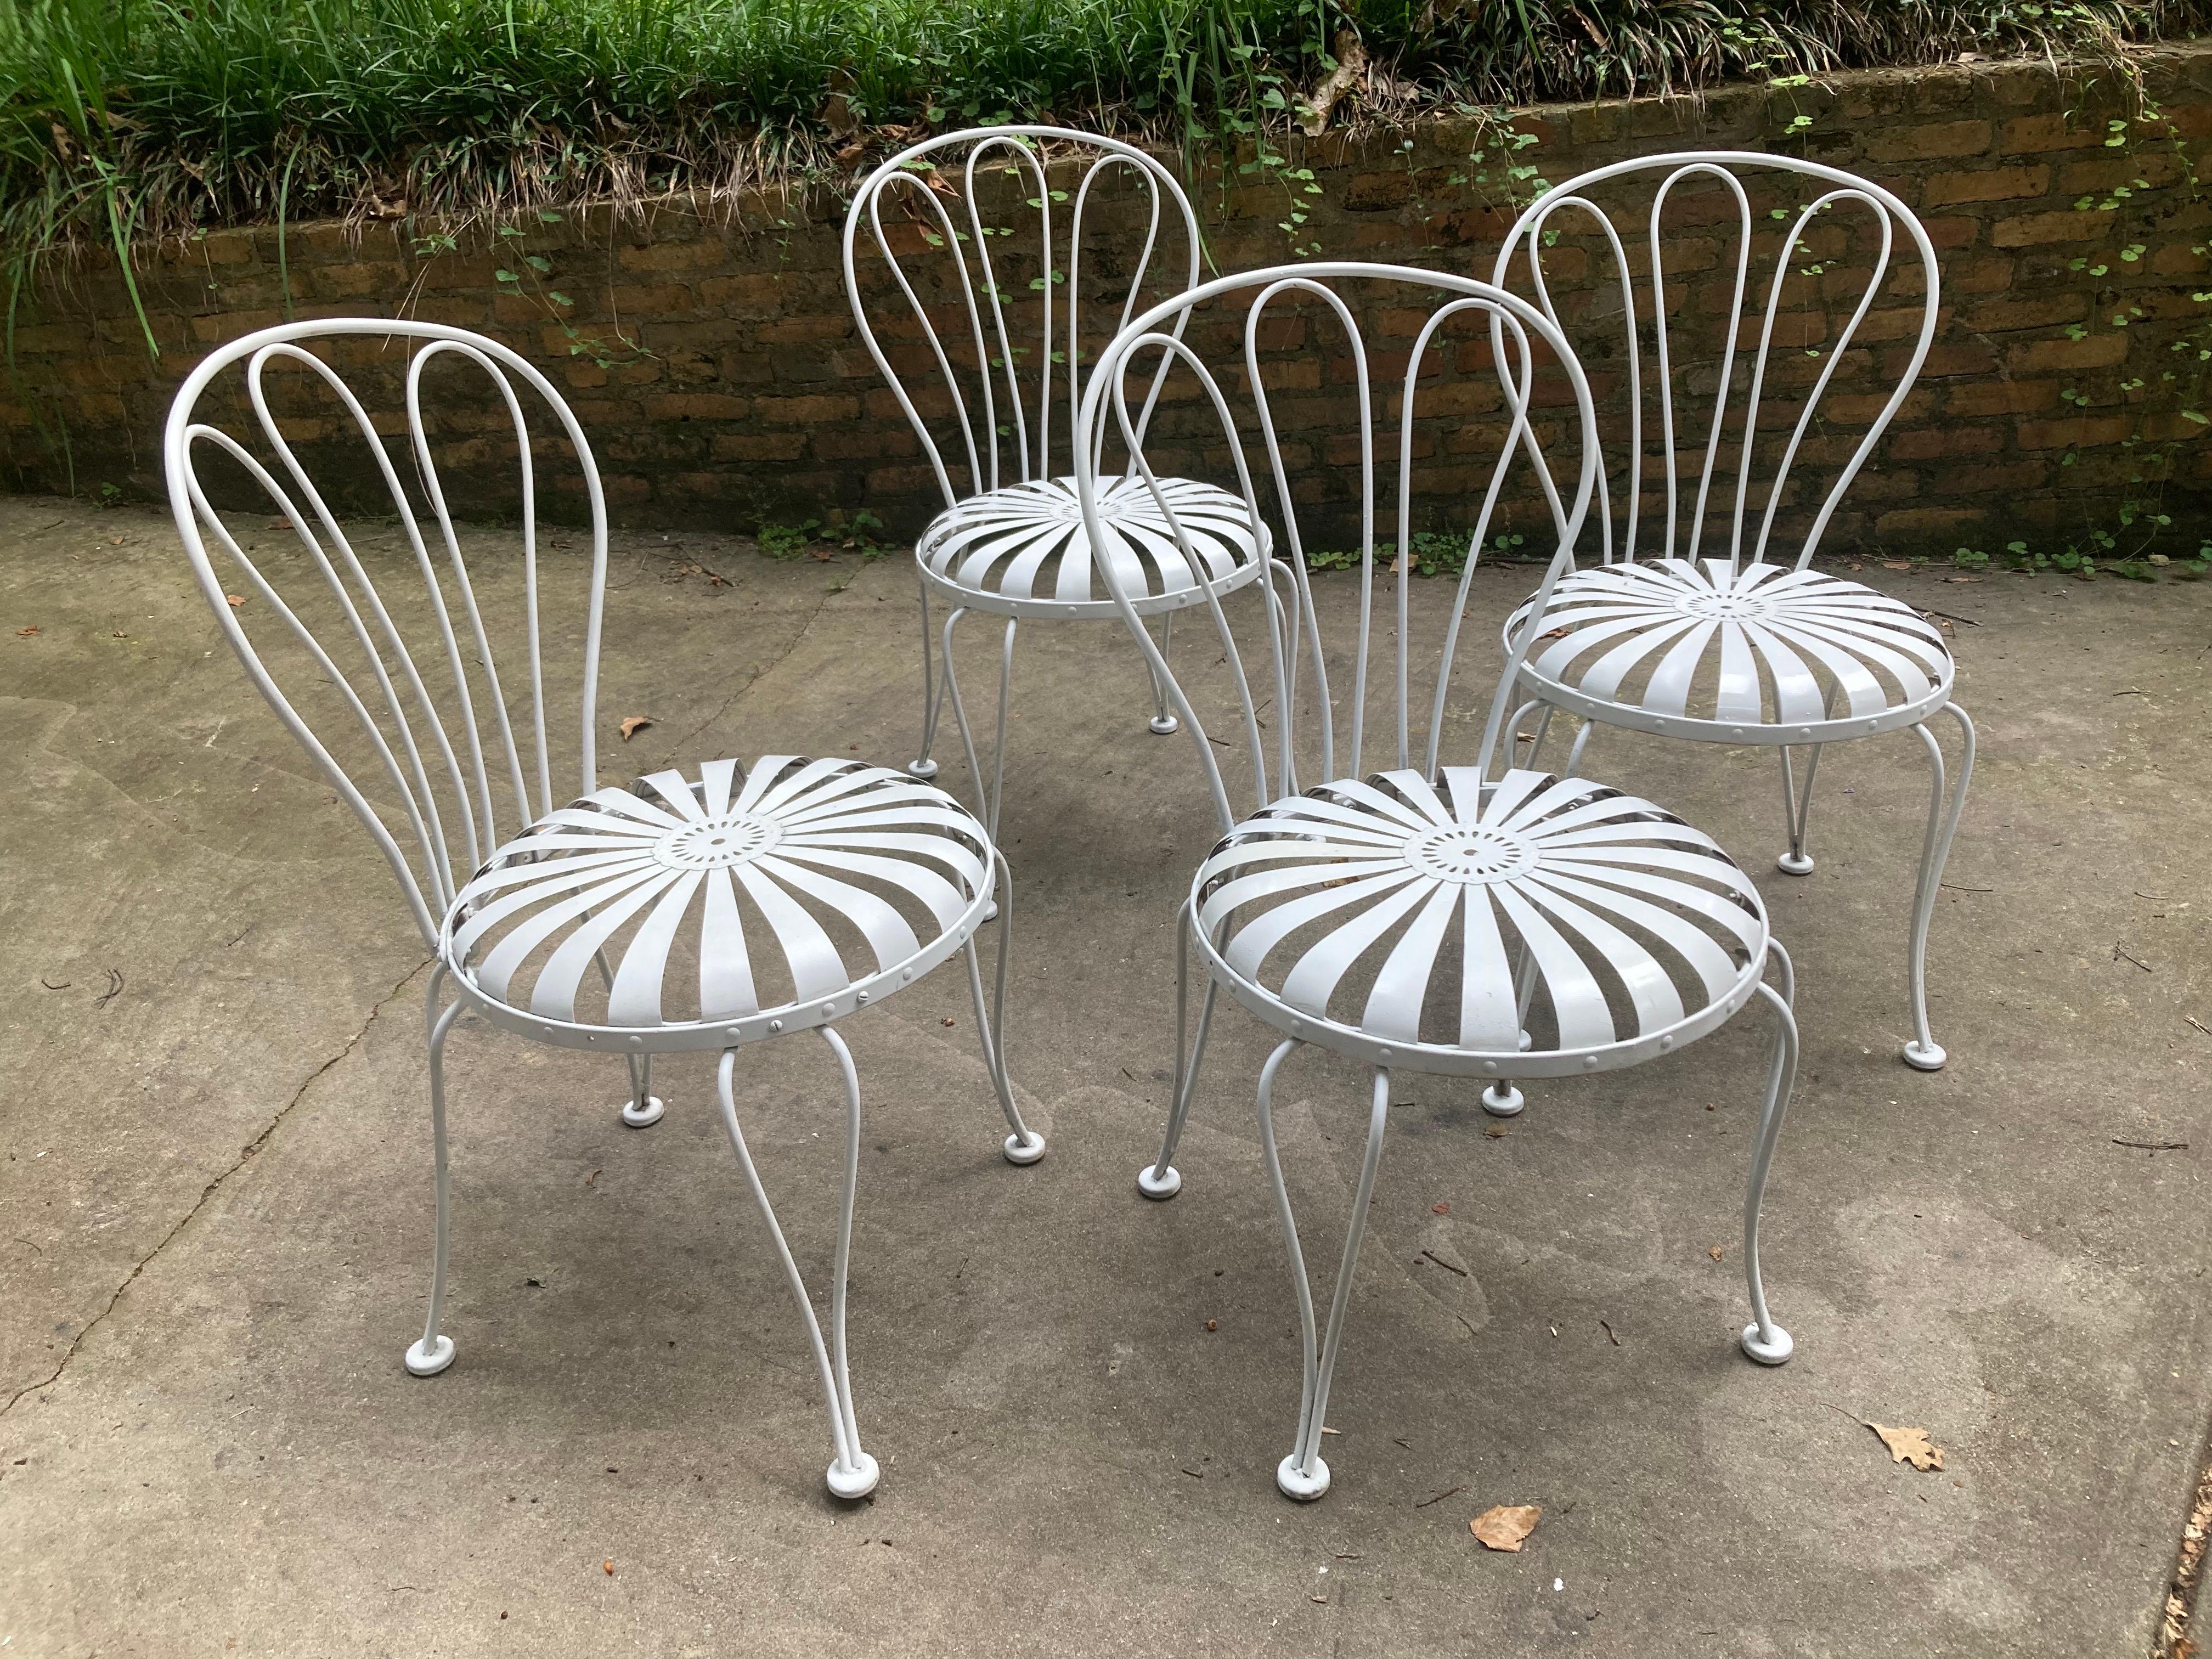 Art Deco francois carre garden chairs -
set of 4 For Sale